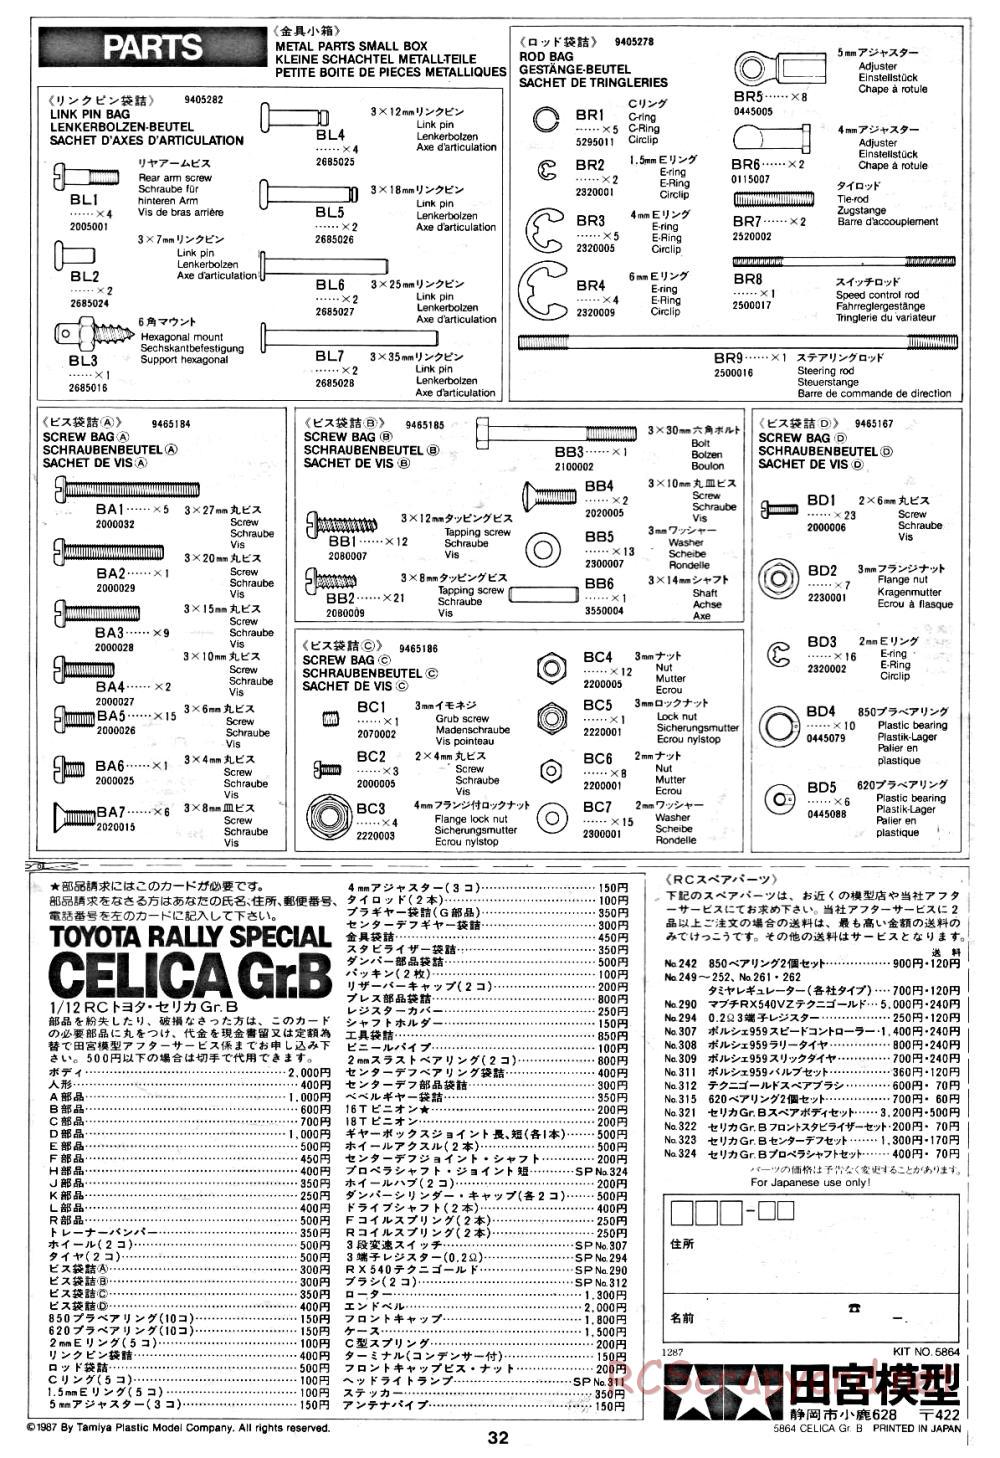 Tamiya - Toyota Celica Gr.B Rally Special - 58064 - Manual - Page 32